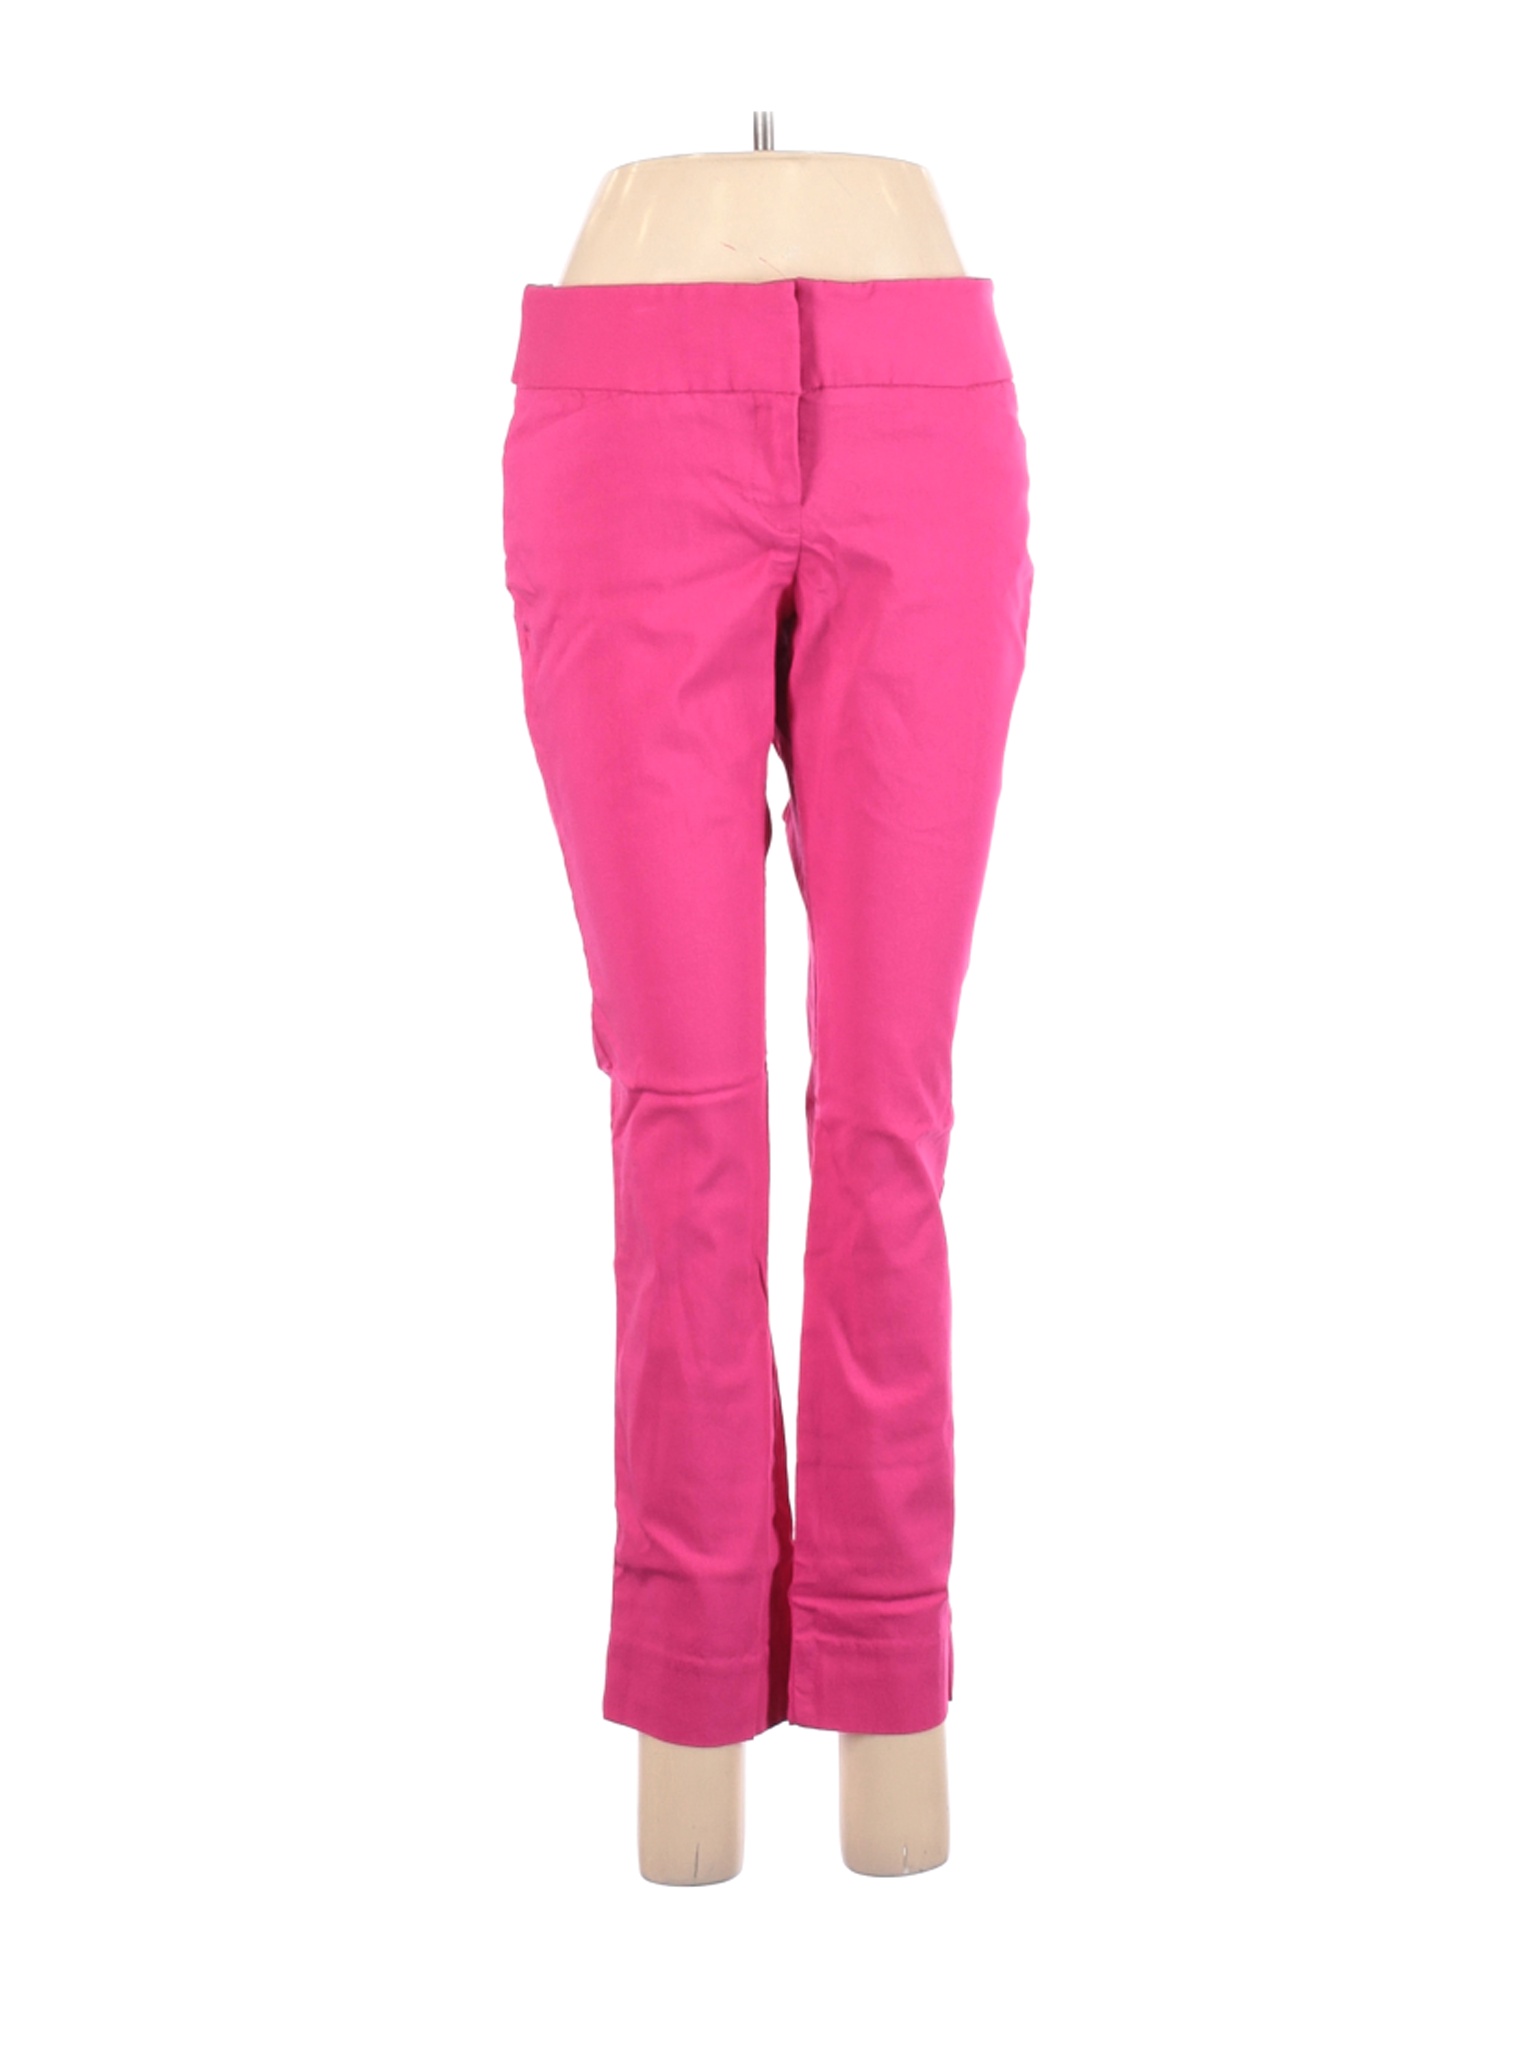 The Limited Women Pink Dress Pants 6 | eBay